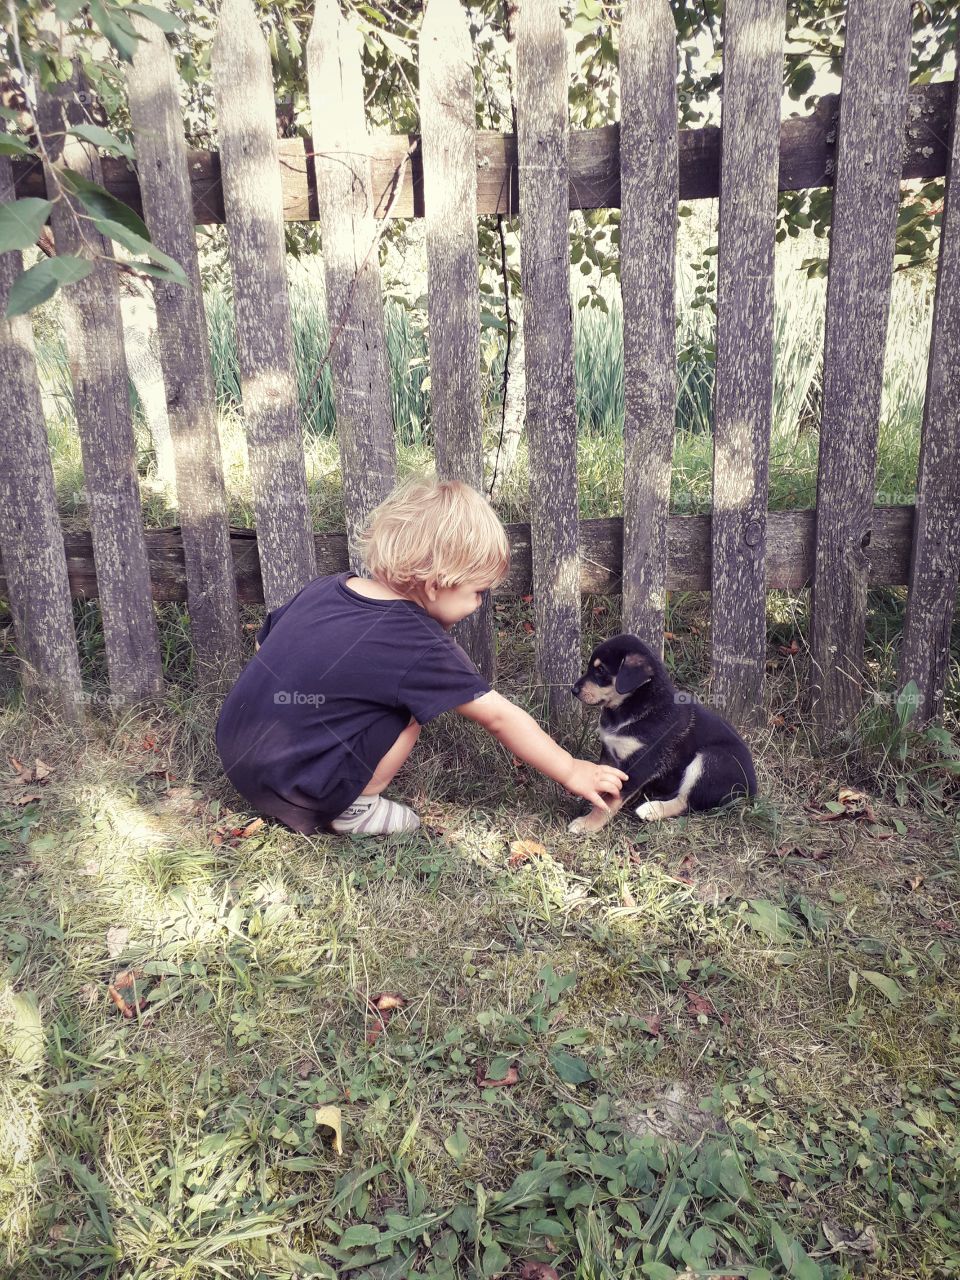 little boy with a puppy